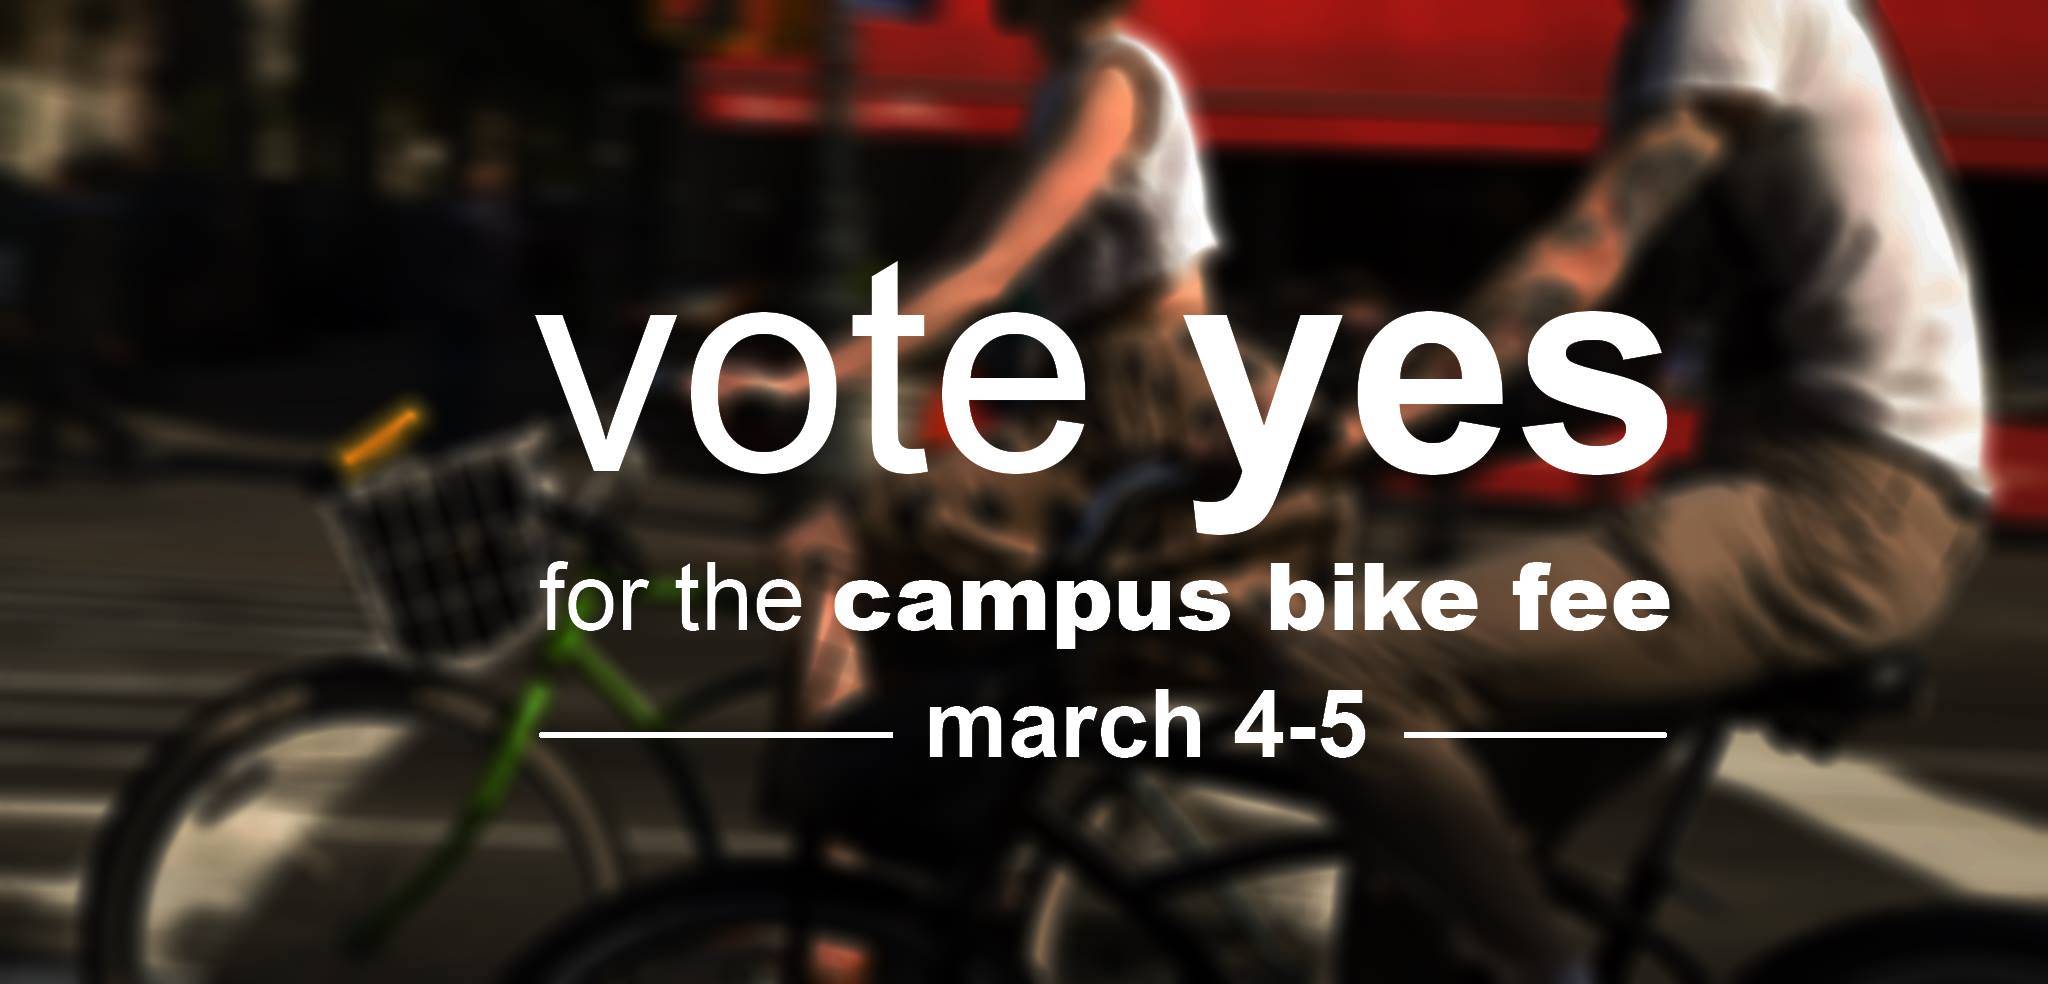 Bike referendum voting to take place